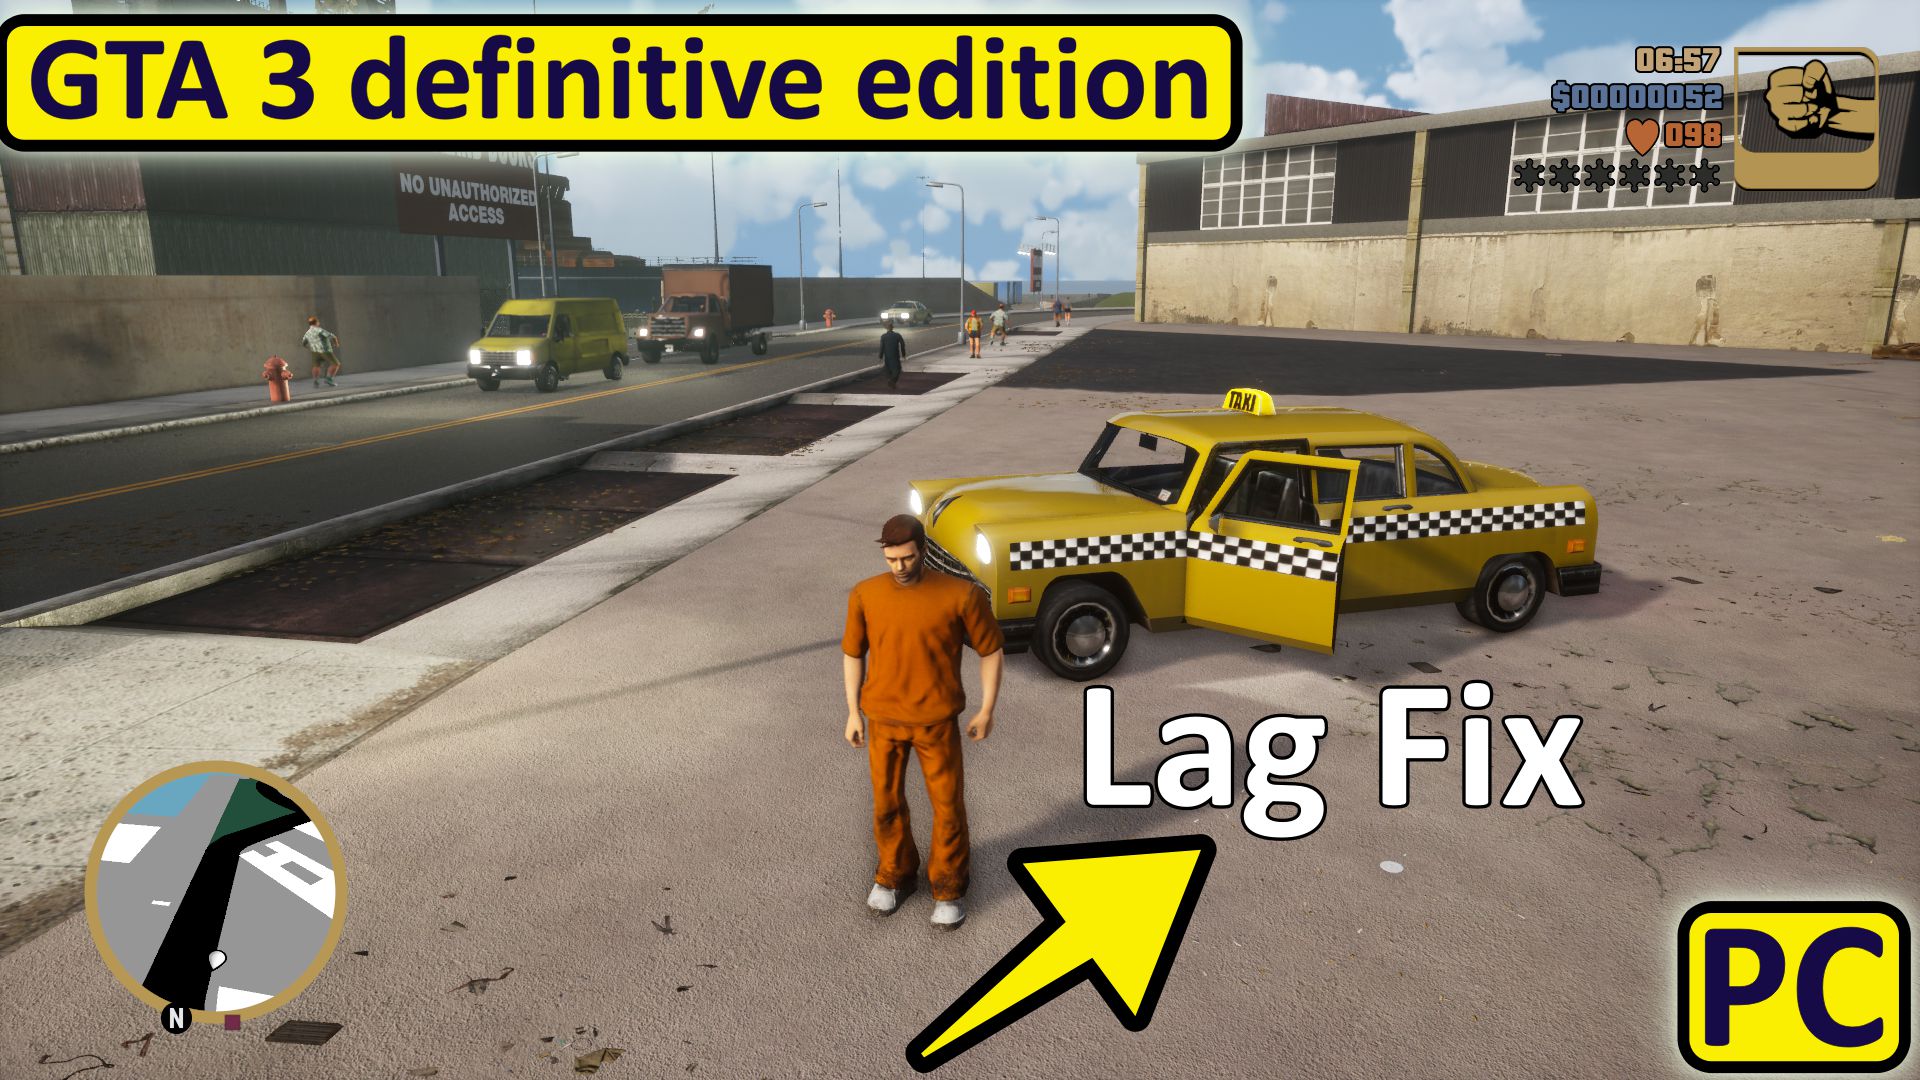 GTA 3 definitive edition lag fix method is here